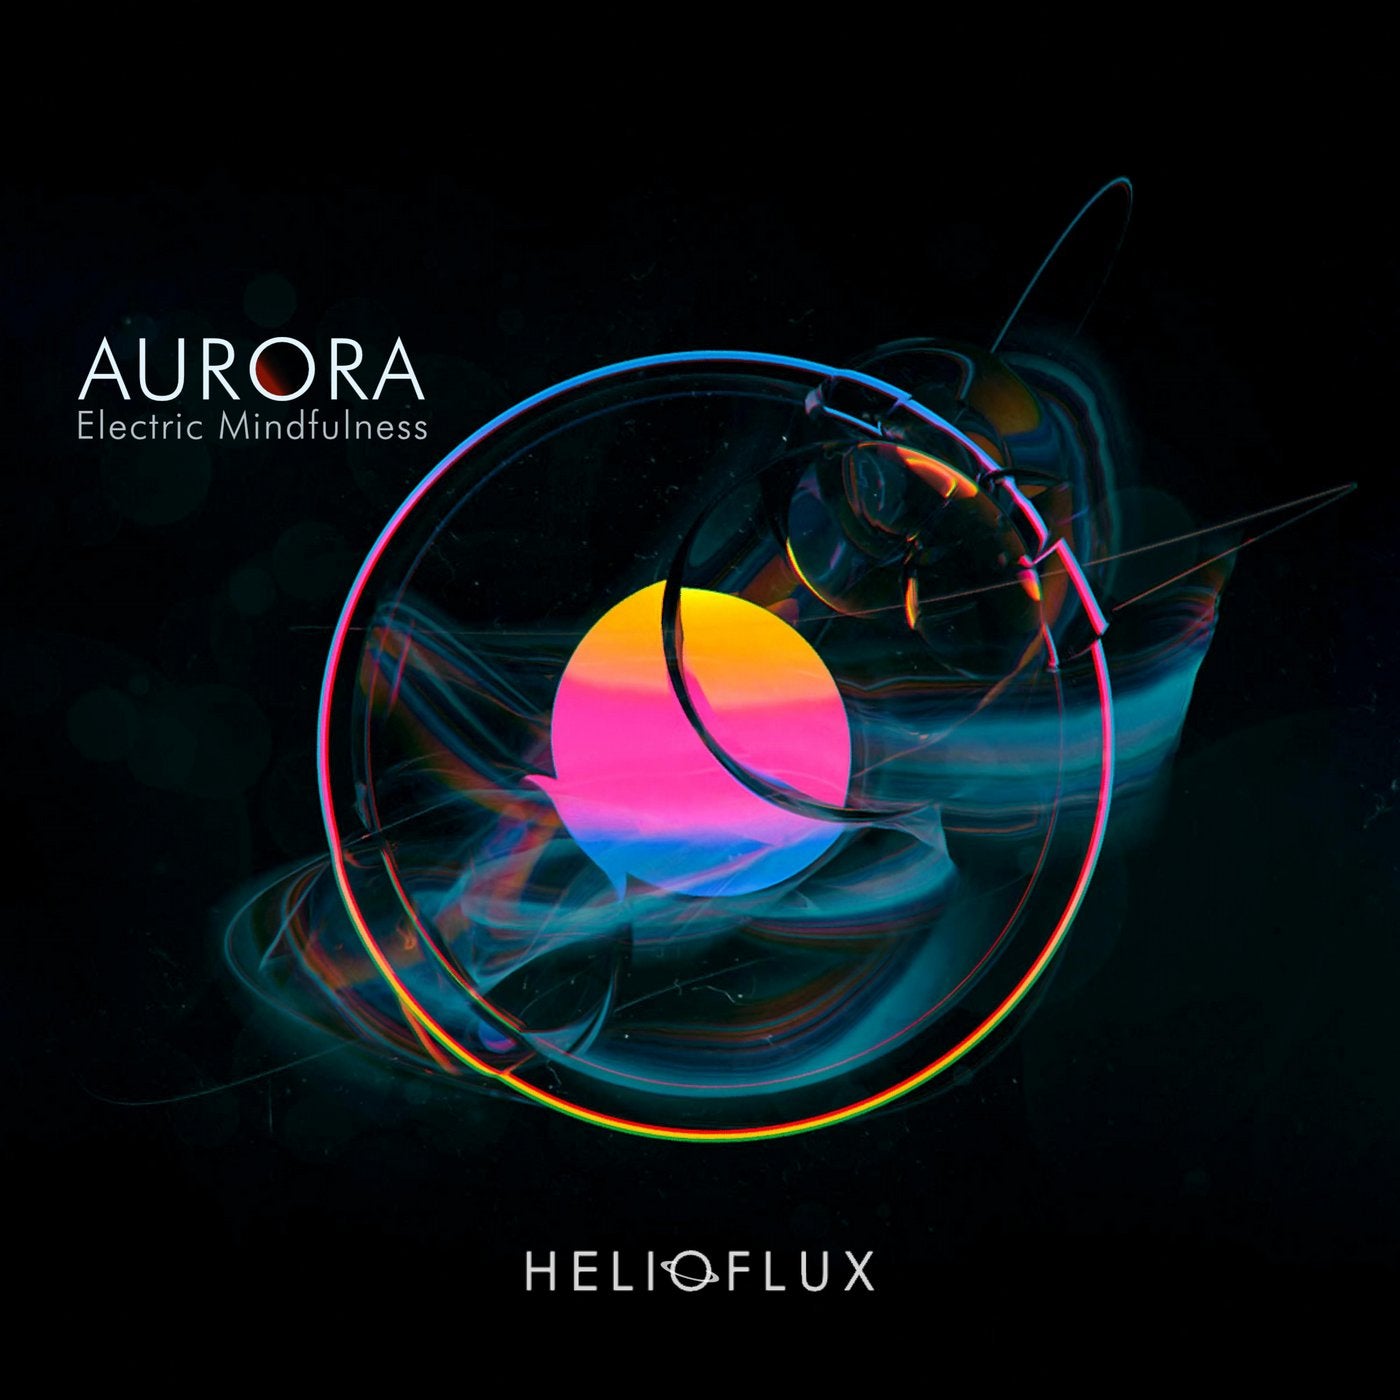 Aurora (Electric Mindfulness)